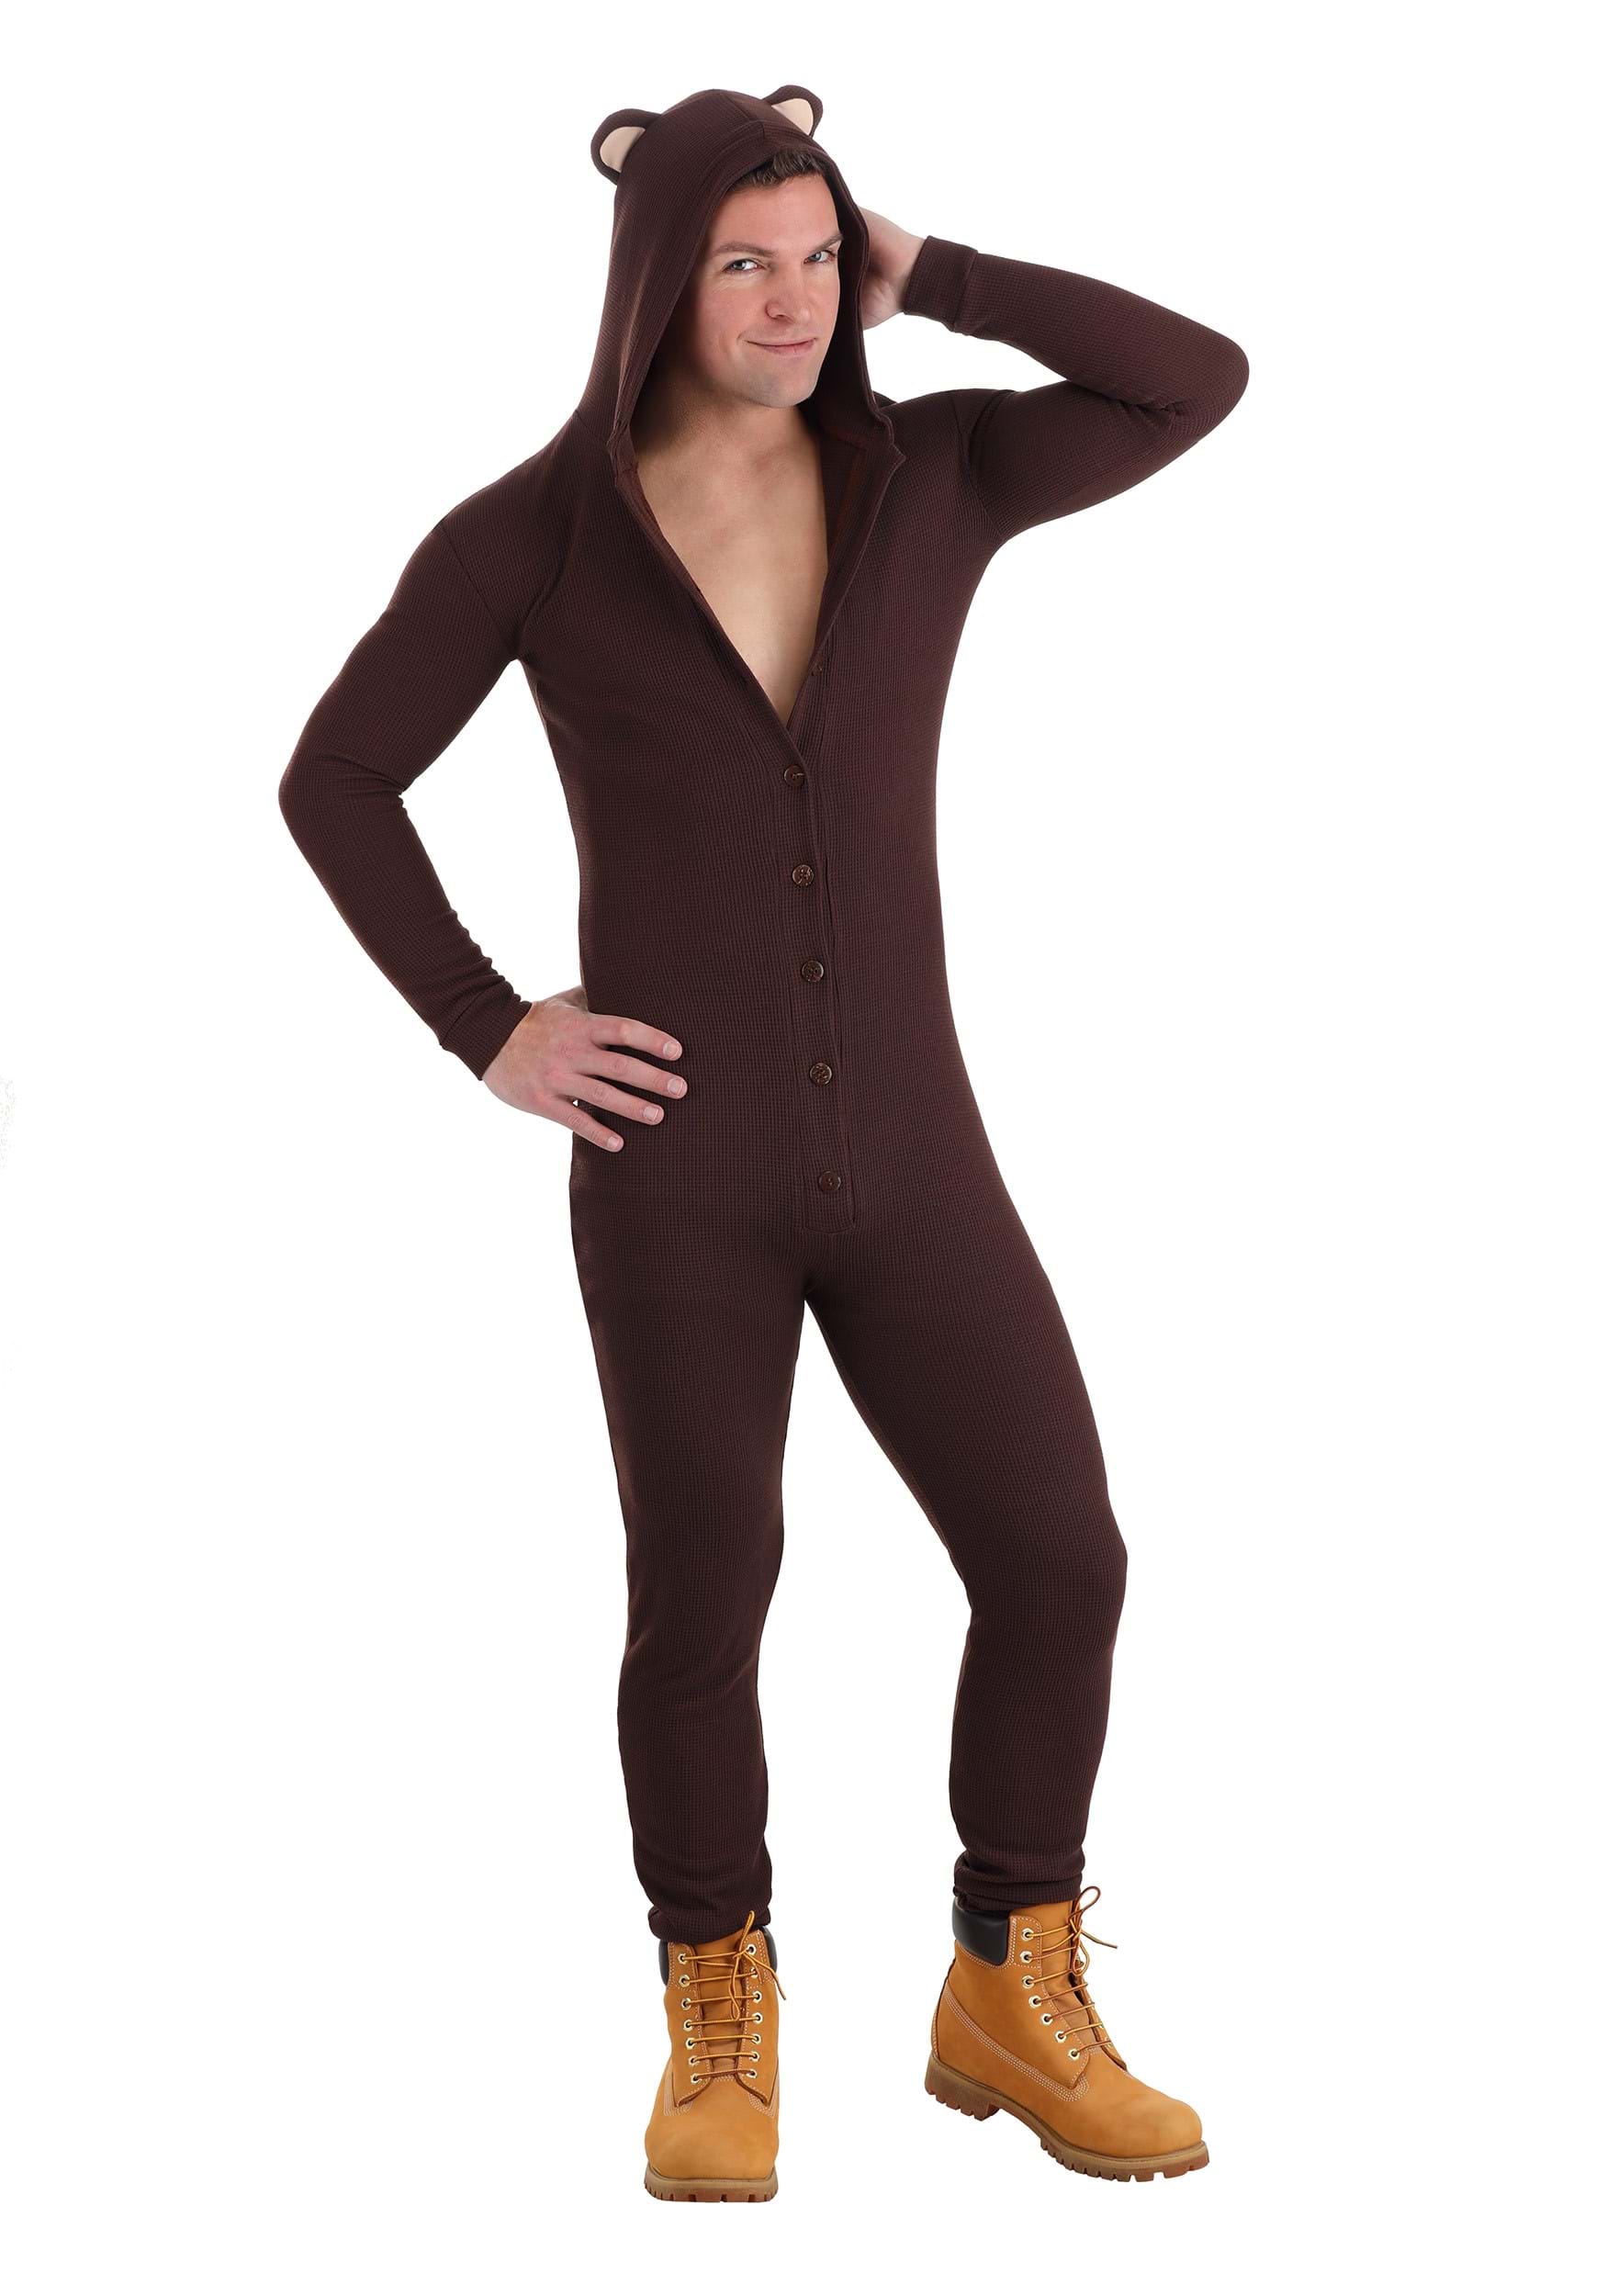 Sexy Bear Men’s Costume